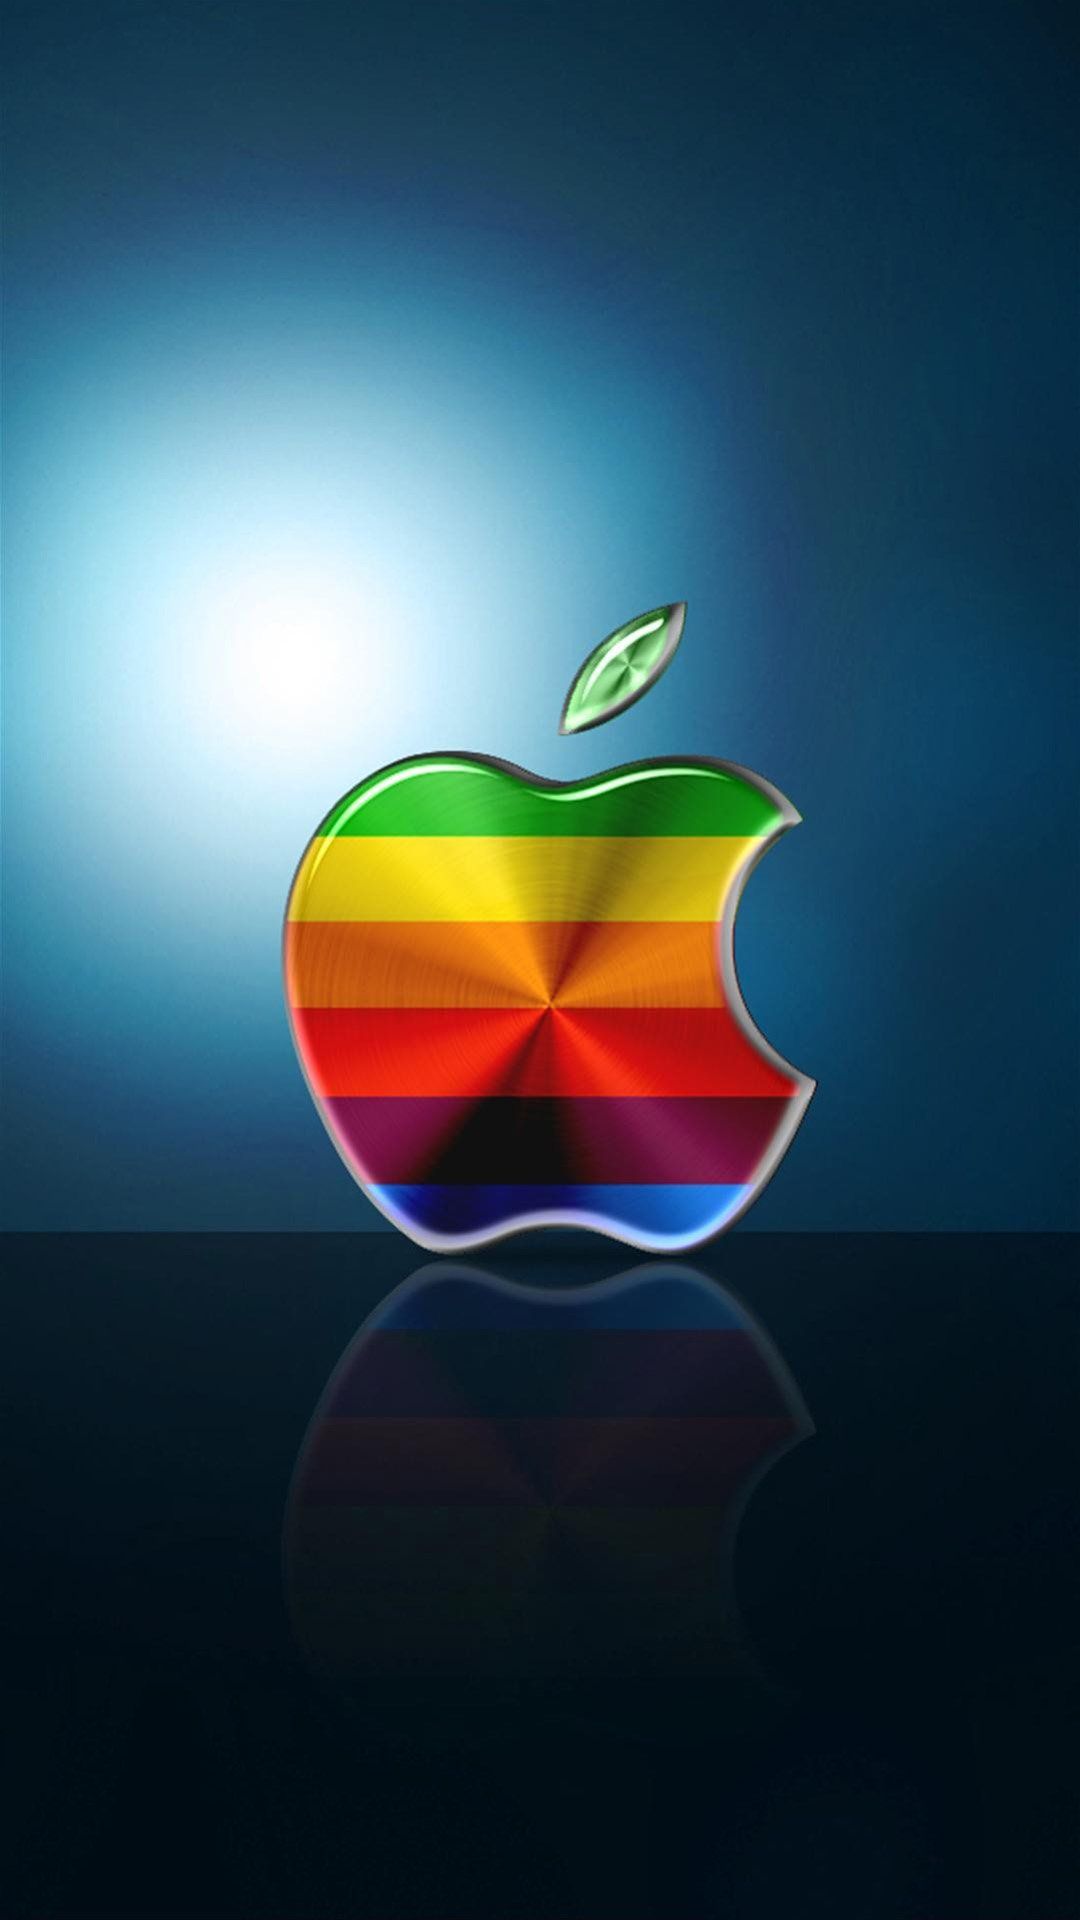 Apple Logo Wallpaper iPhone 7 Plus